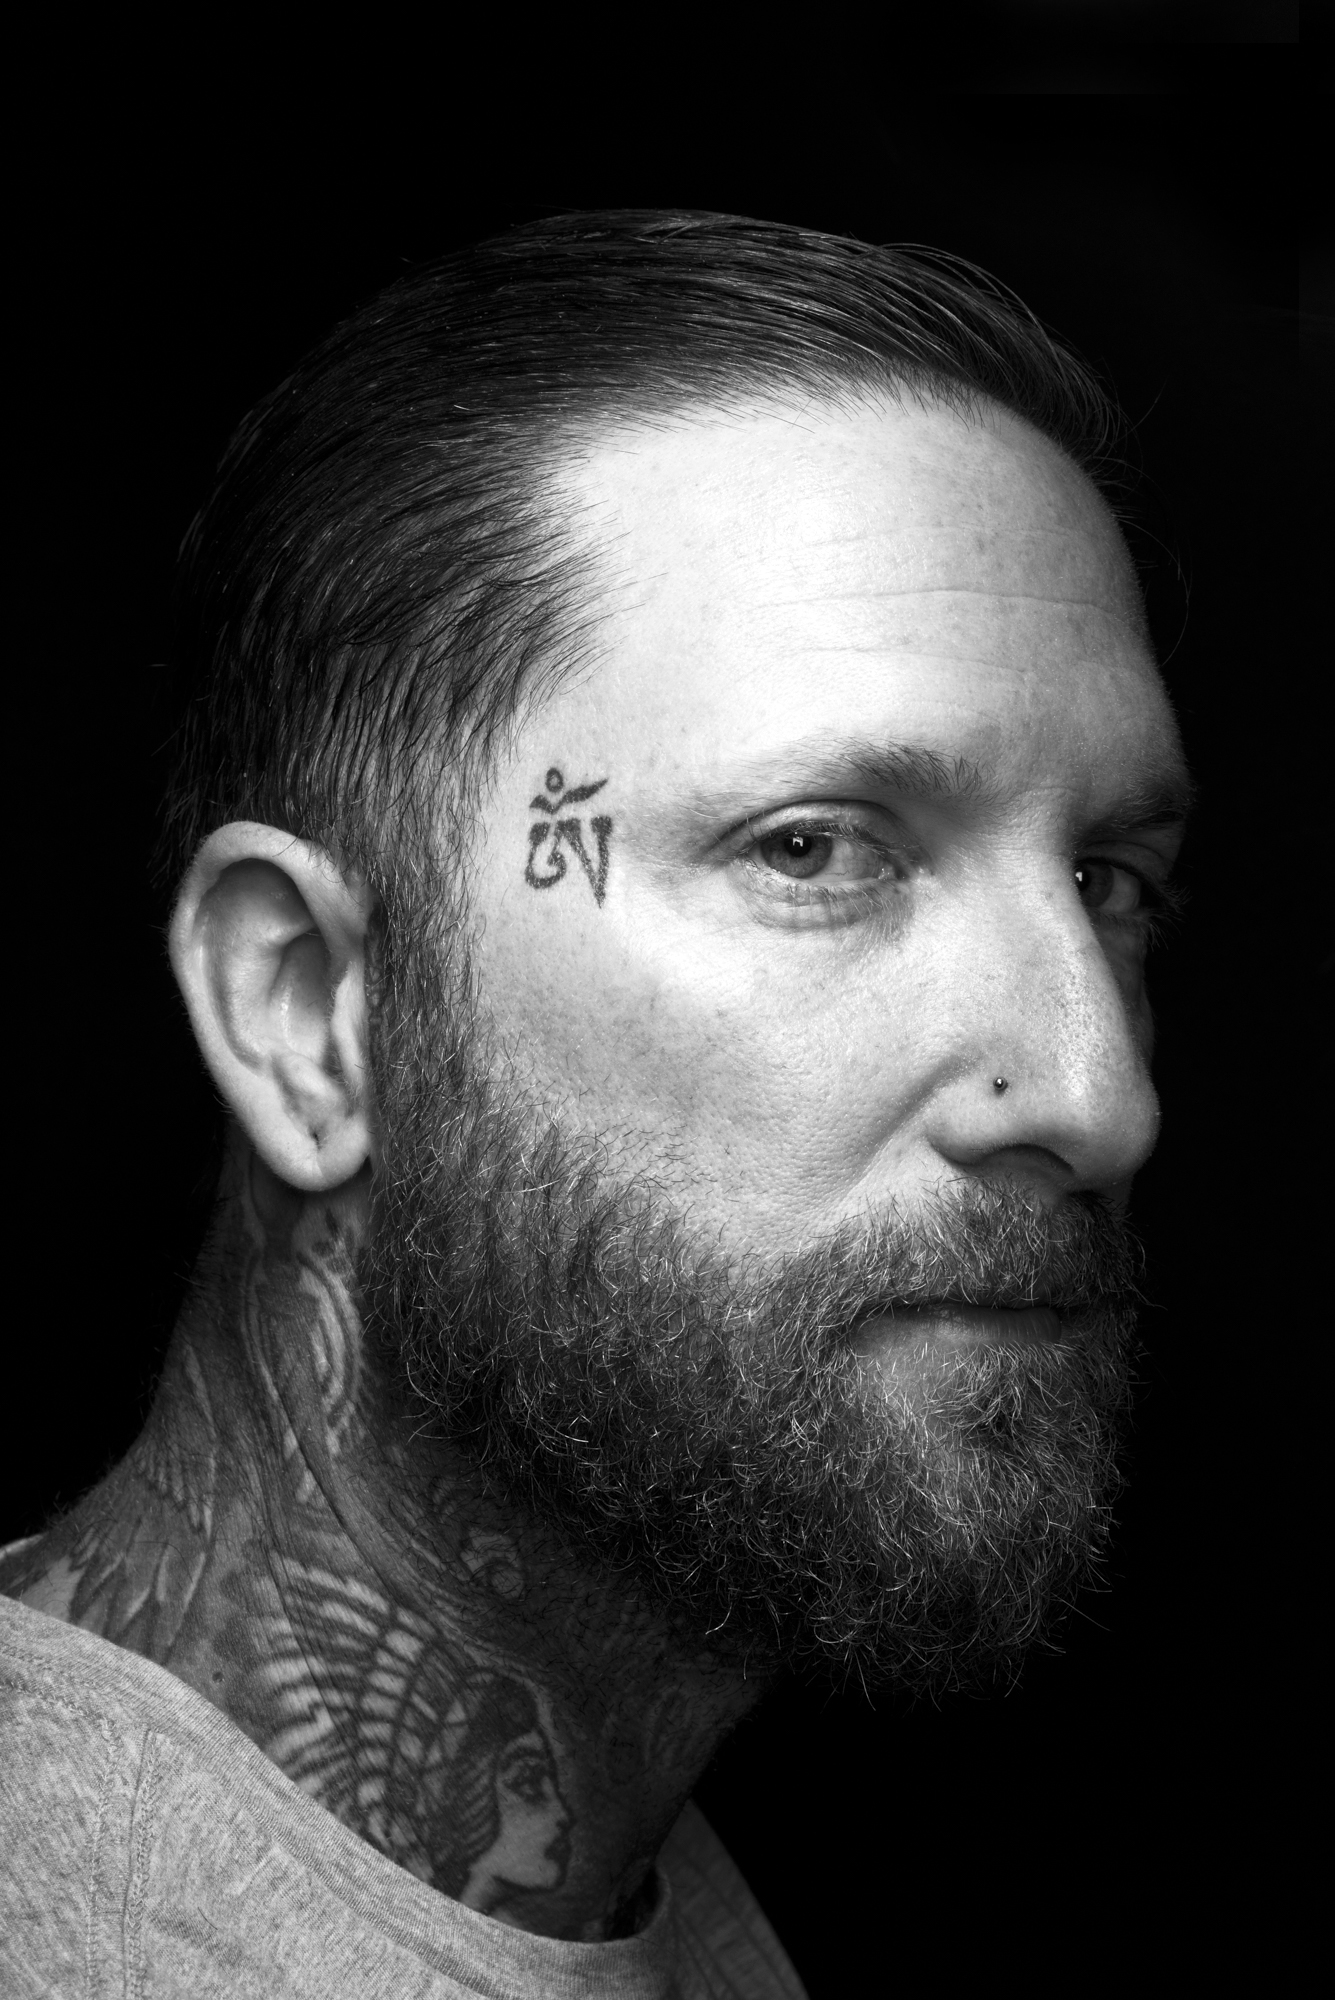  Portrait of a tattooed barber in Portland, Oregon 